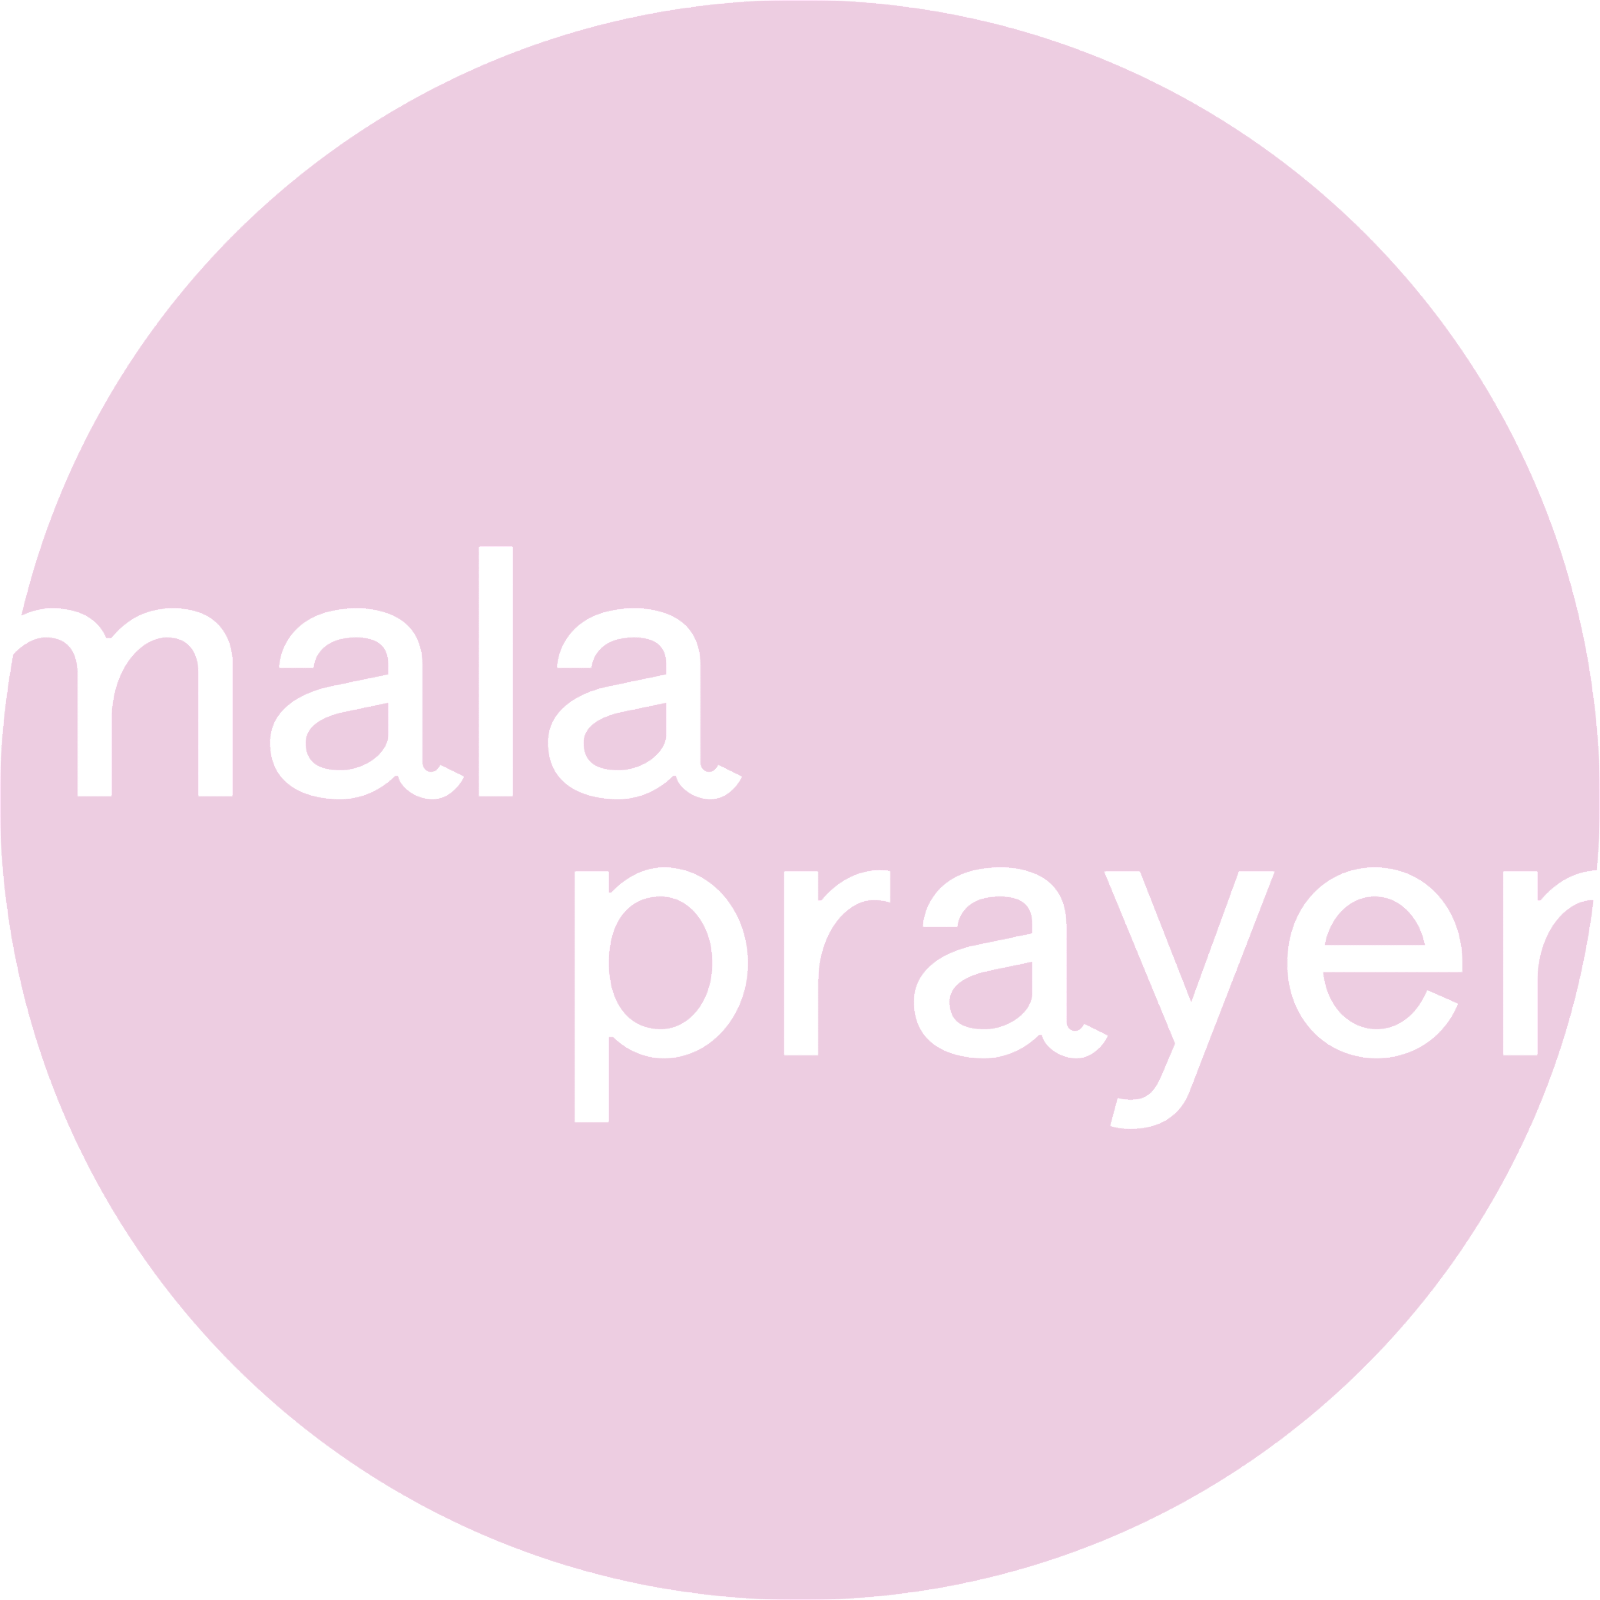 mala prayer